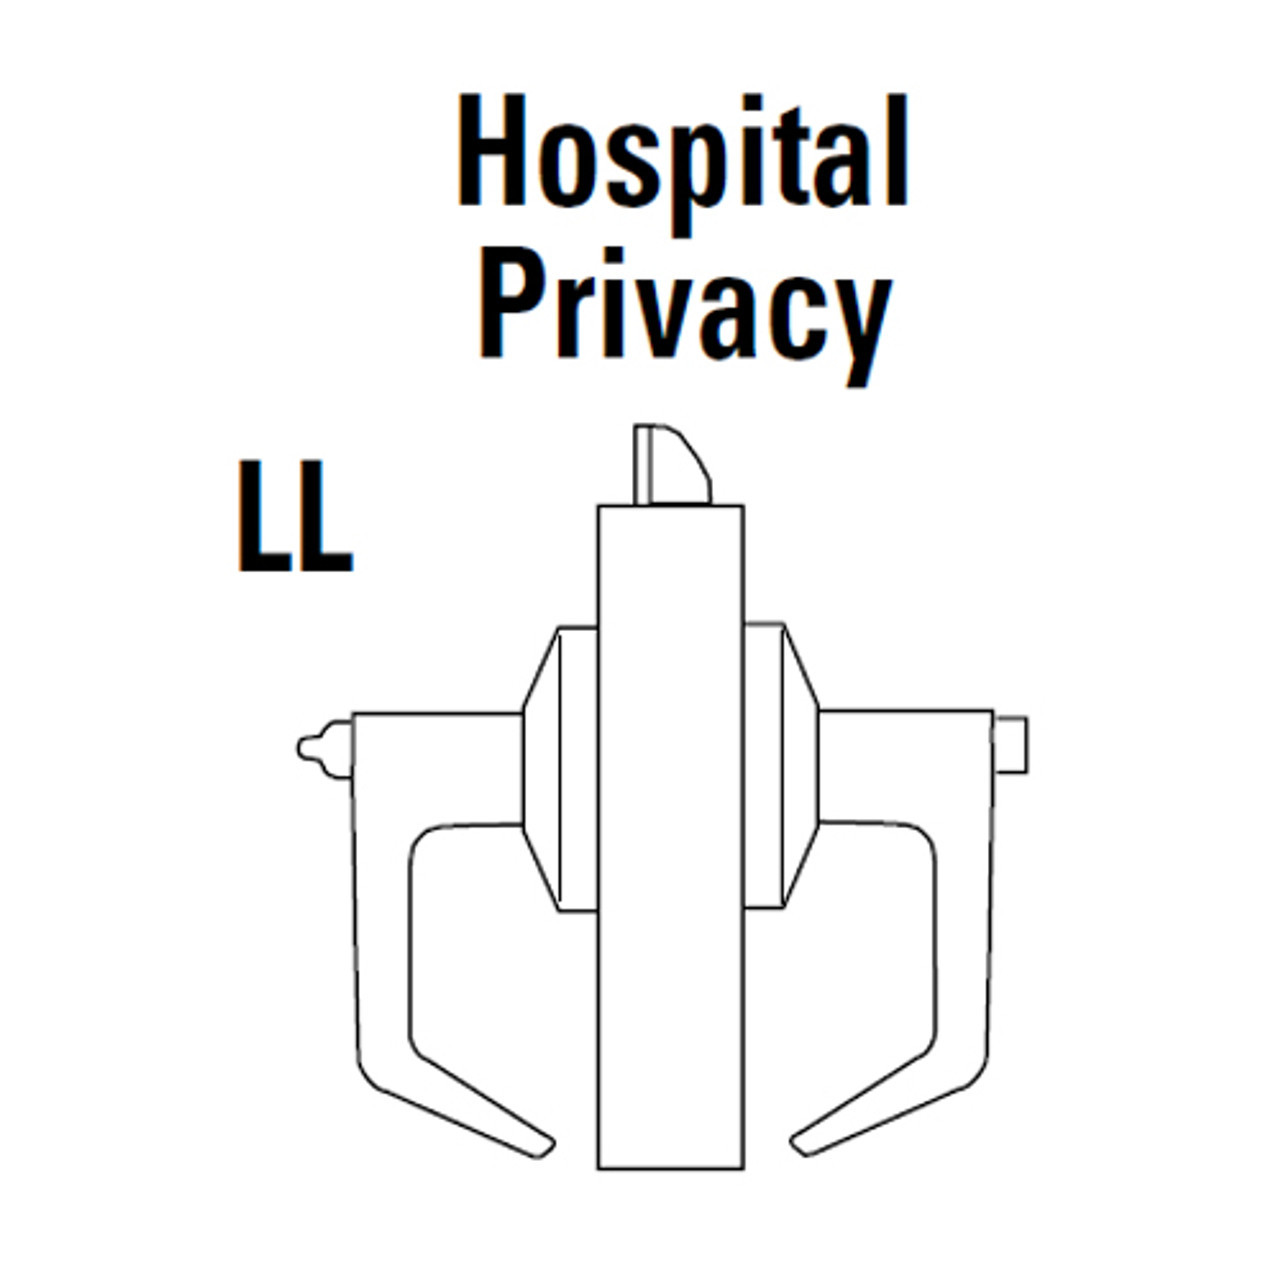 9K30LL14KSTK690LM Best 9K Series Hospital Privacy Heavy Duty Cylindrical Lever Locks in Dark Bronze